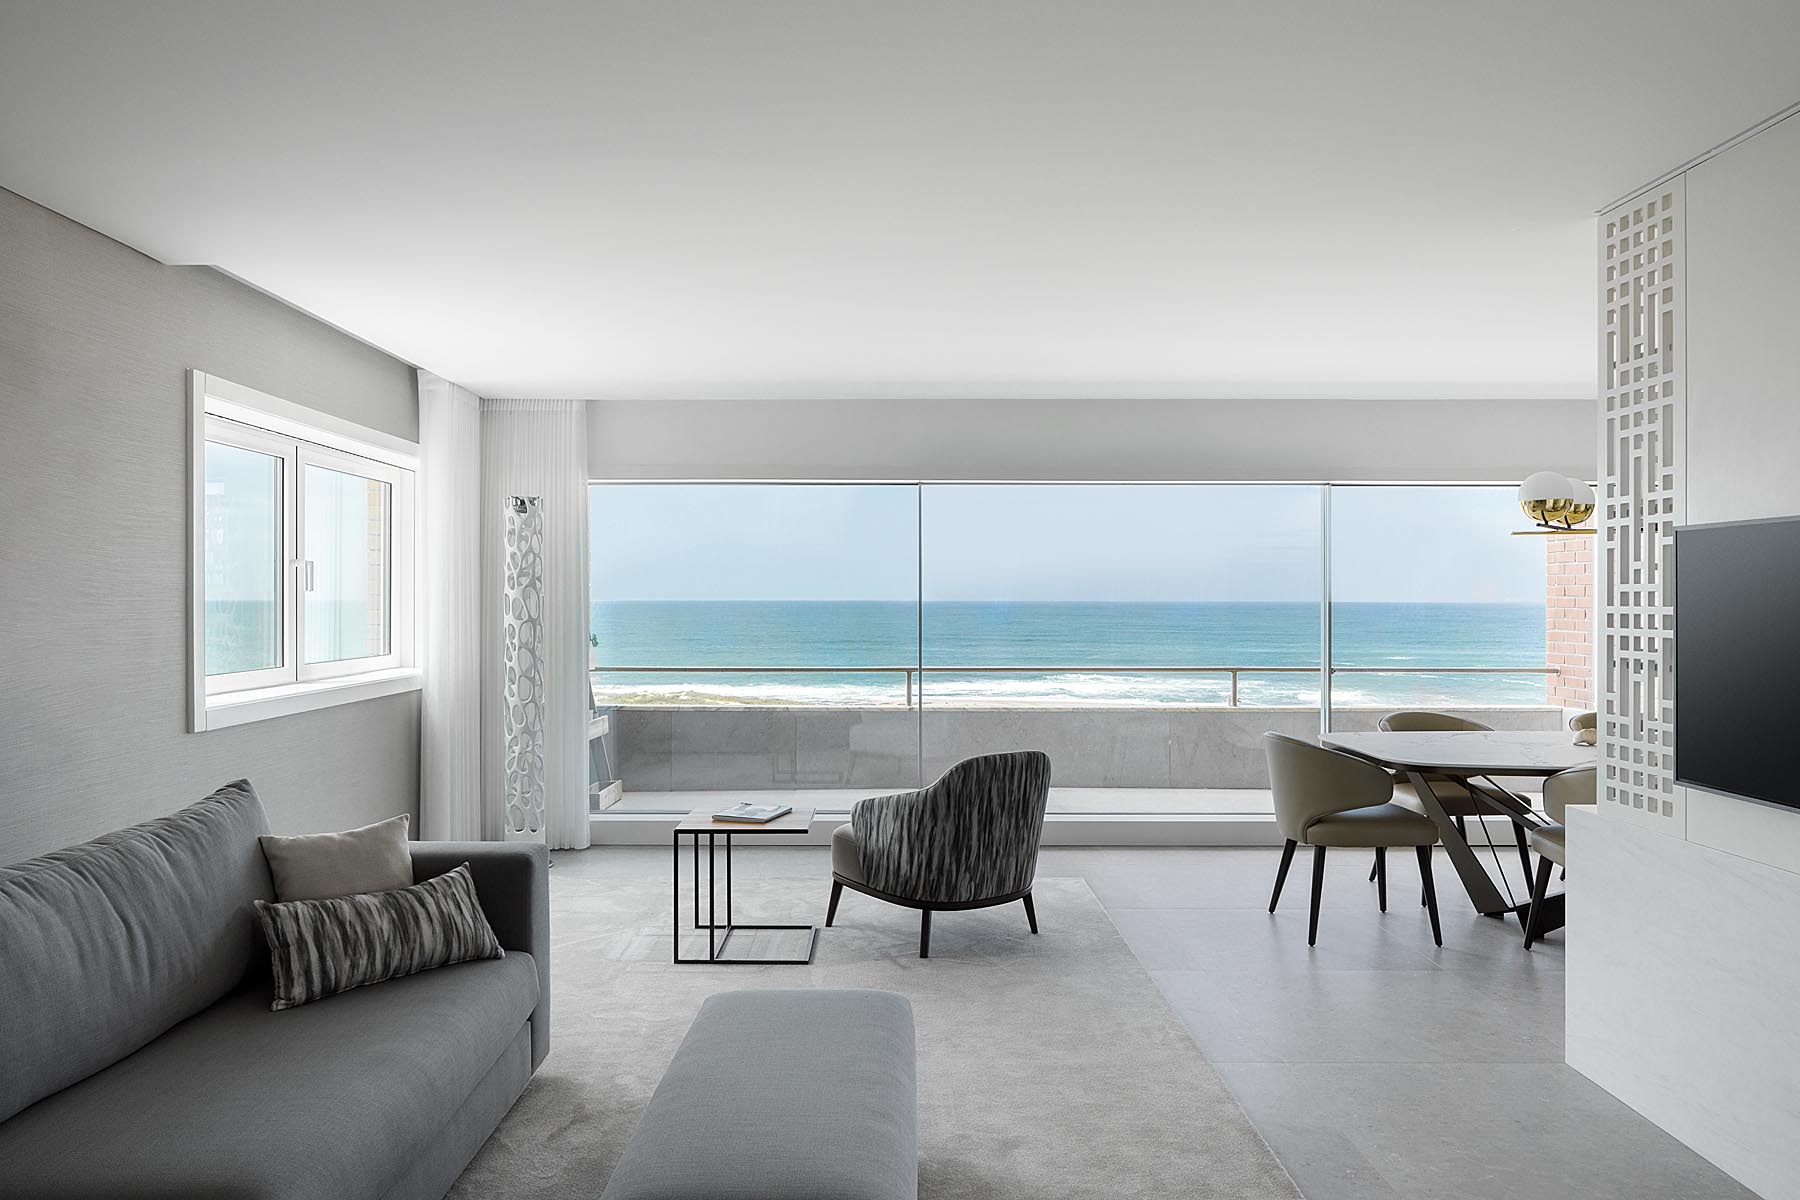 Un appartamento total white con vista mozzafiato sull’oceano, appartamento São Felix, Paolo Moreira Architectures